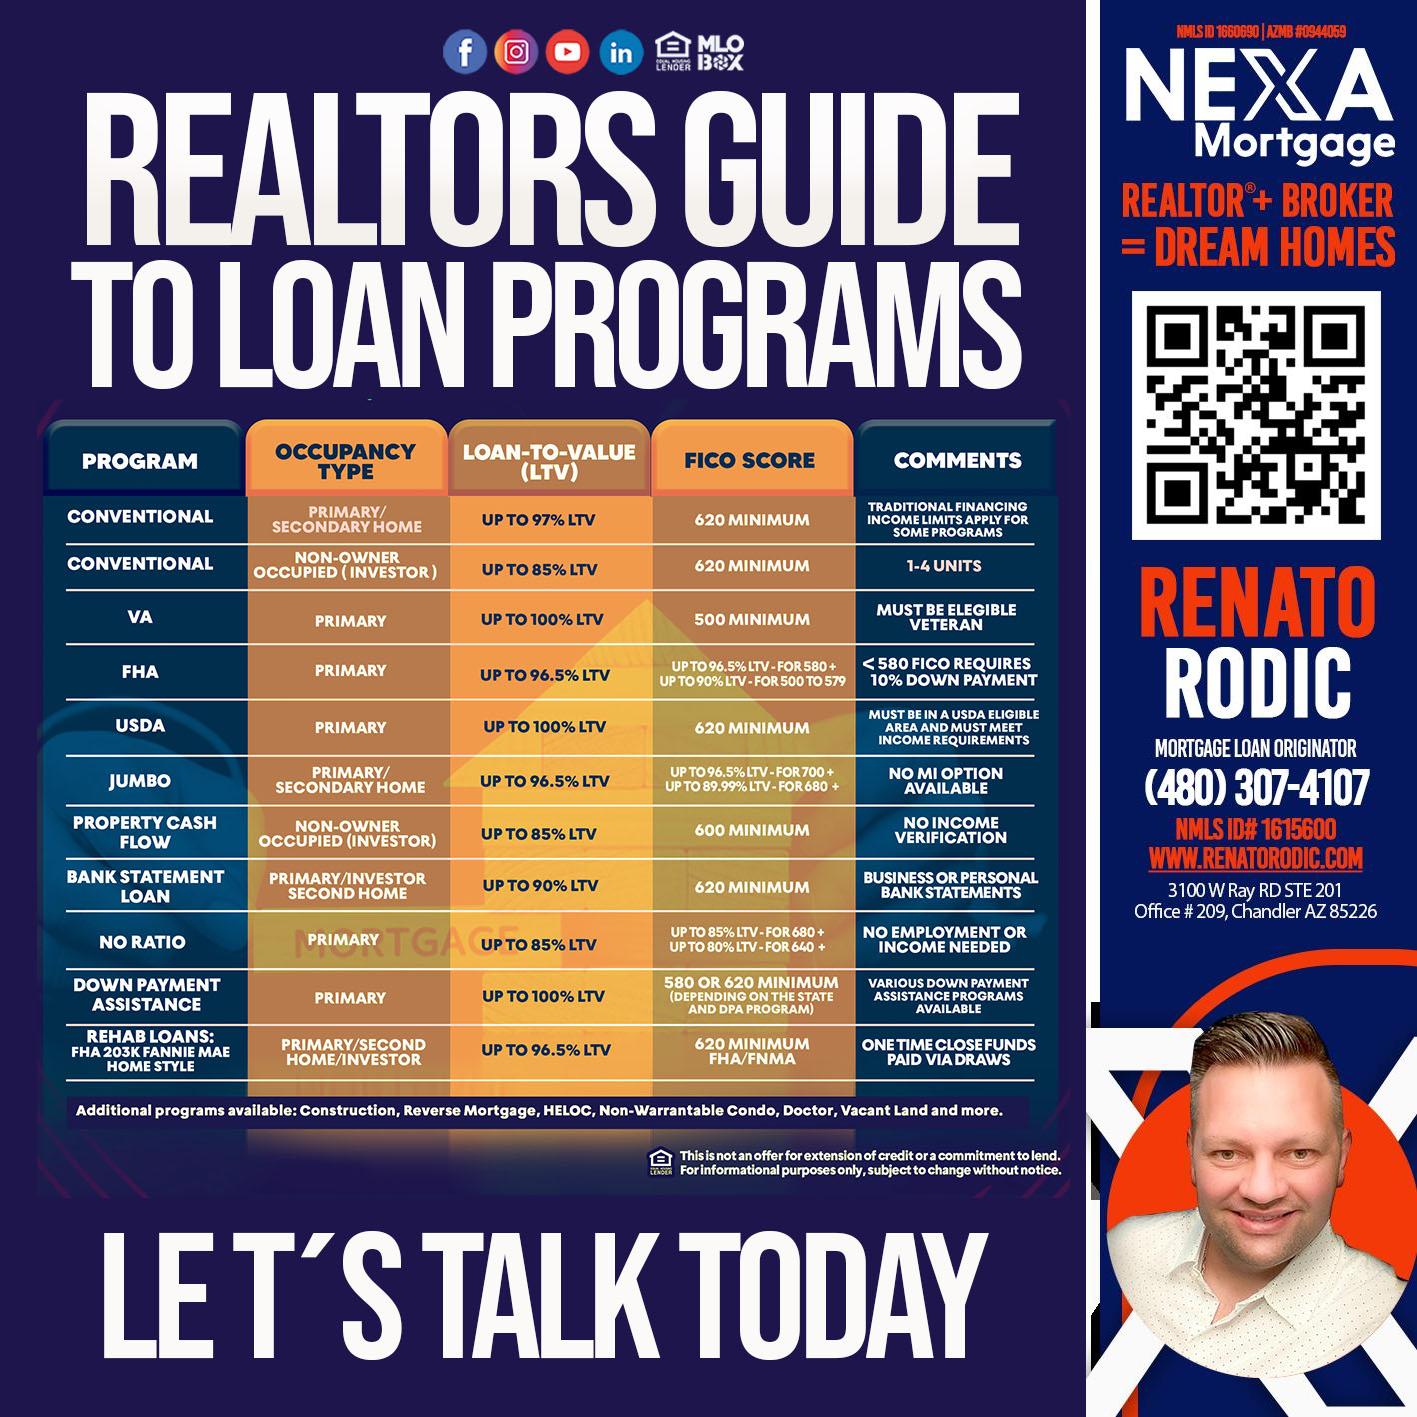 realtors lets collab - Renato Rodic -Mortgage Loan Originator